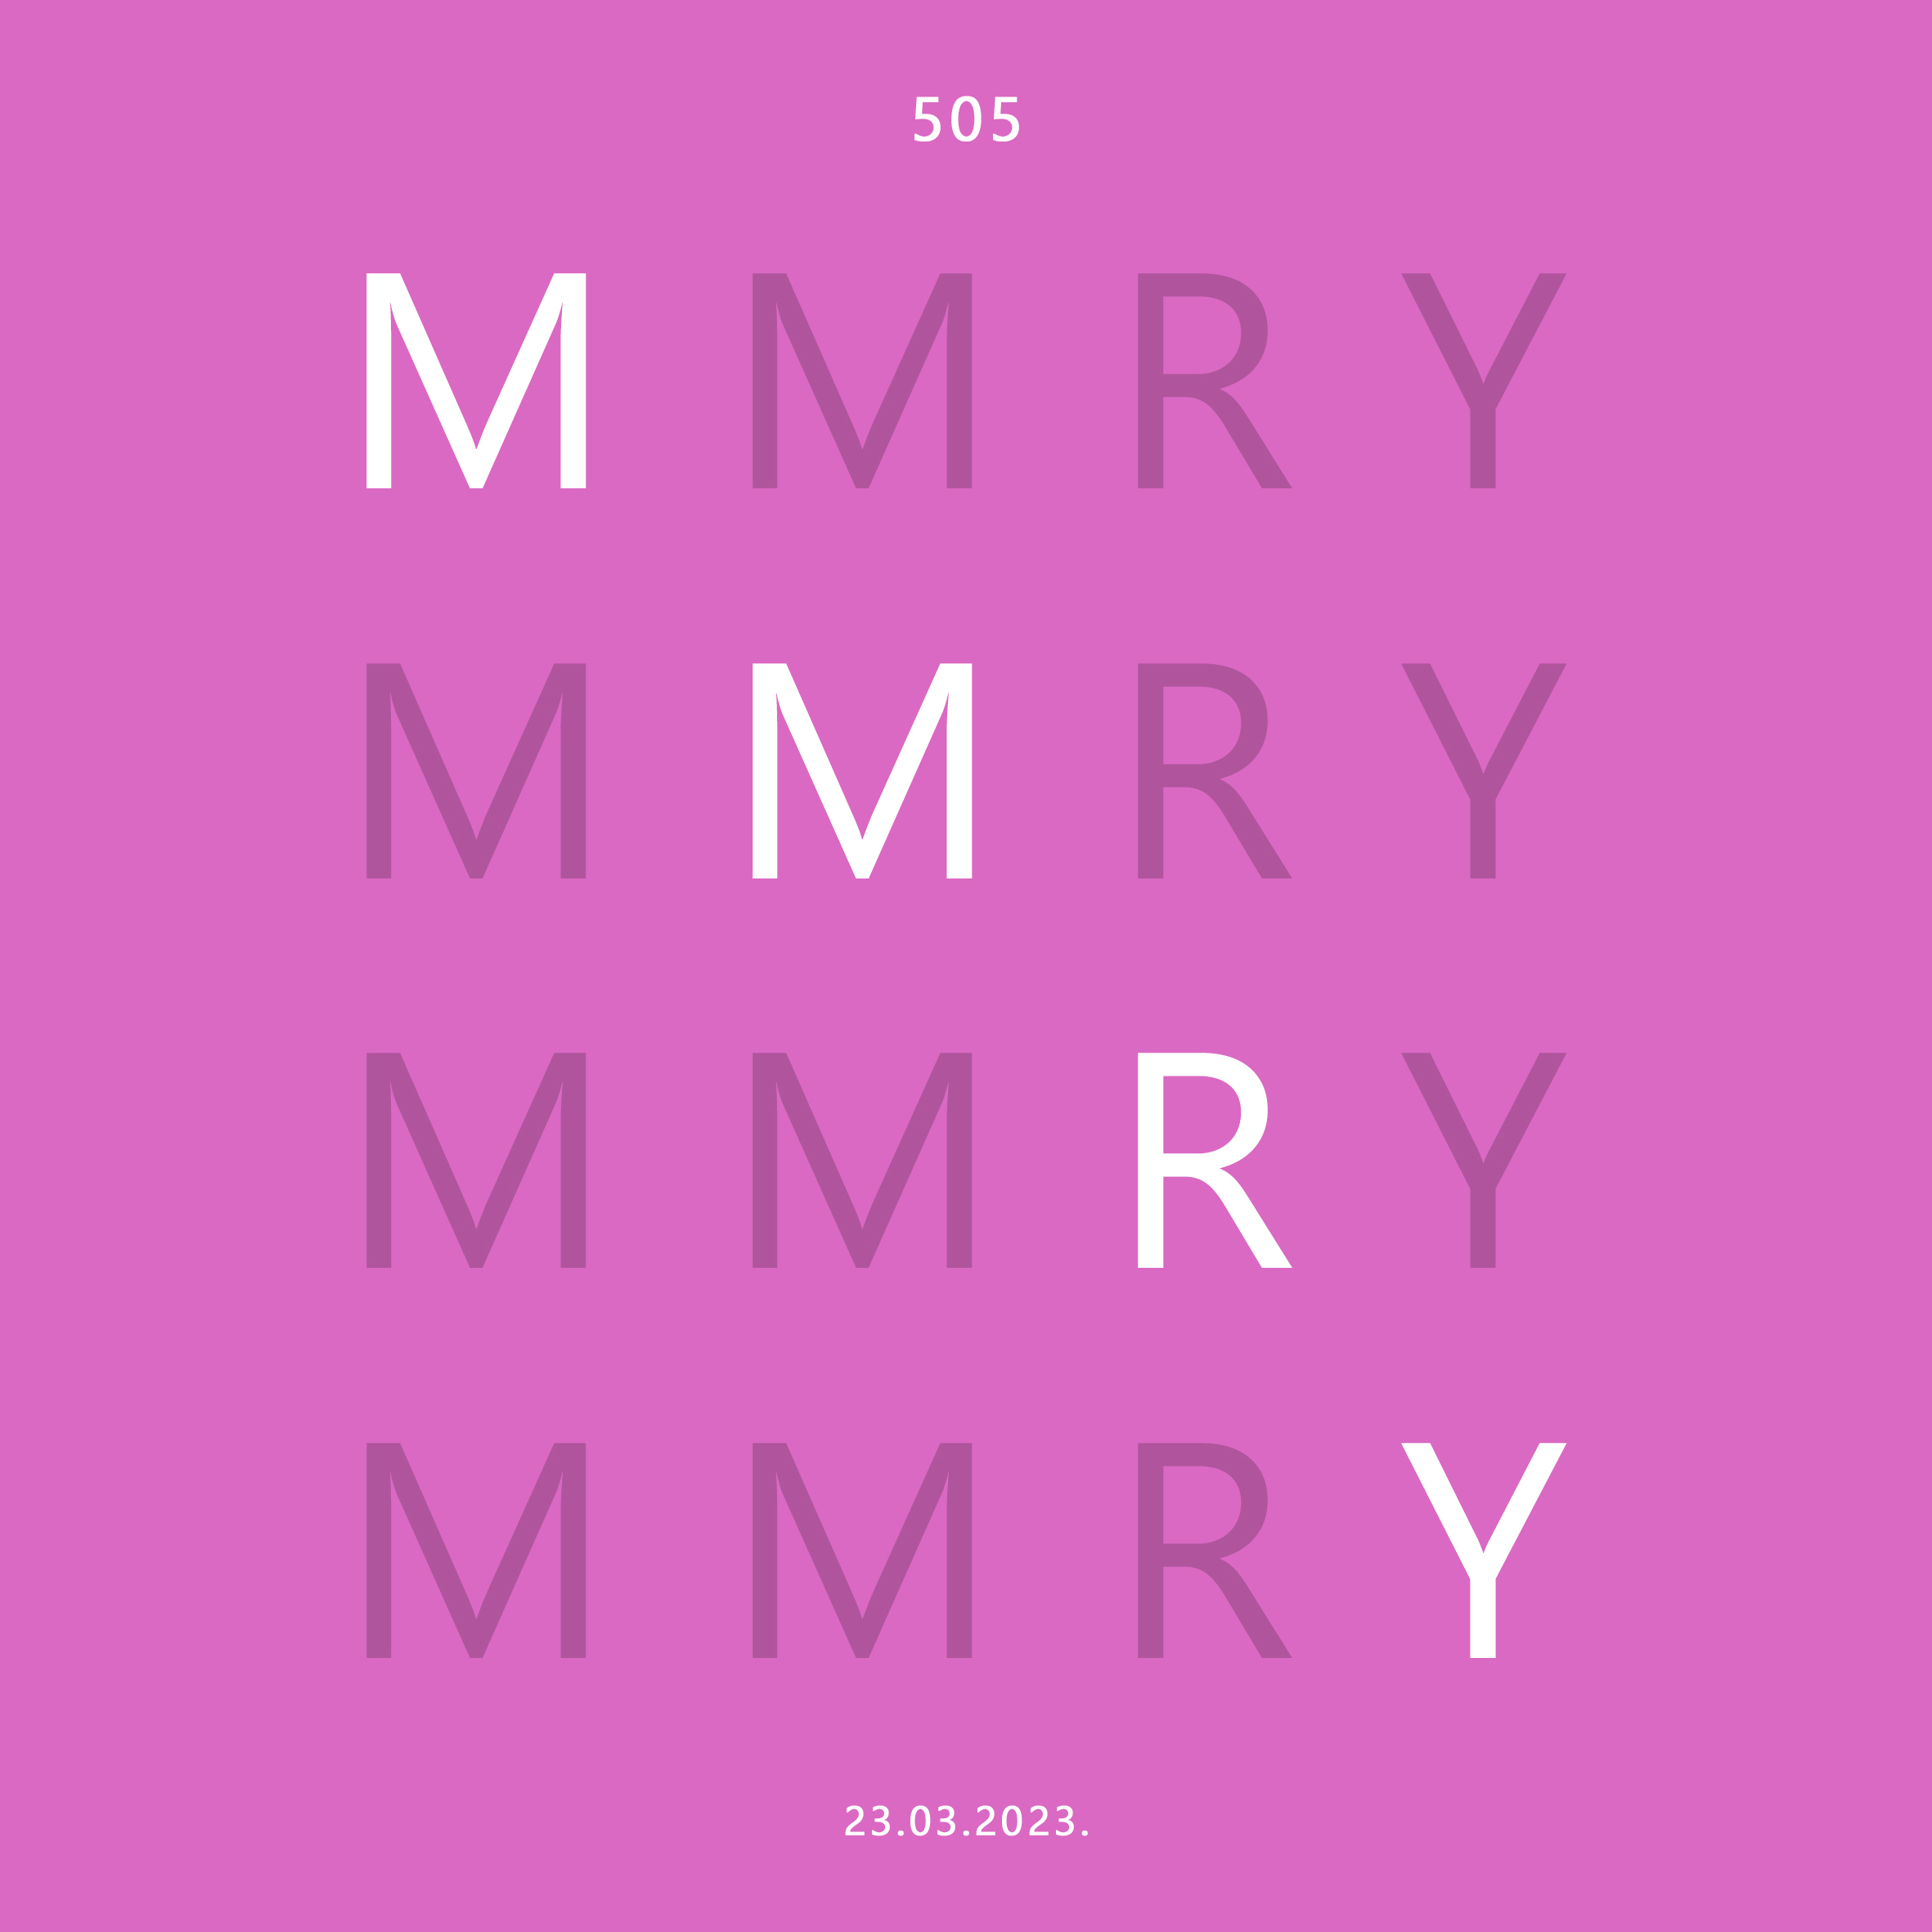 505 / MMRY / 23.03.2023.